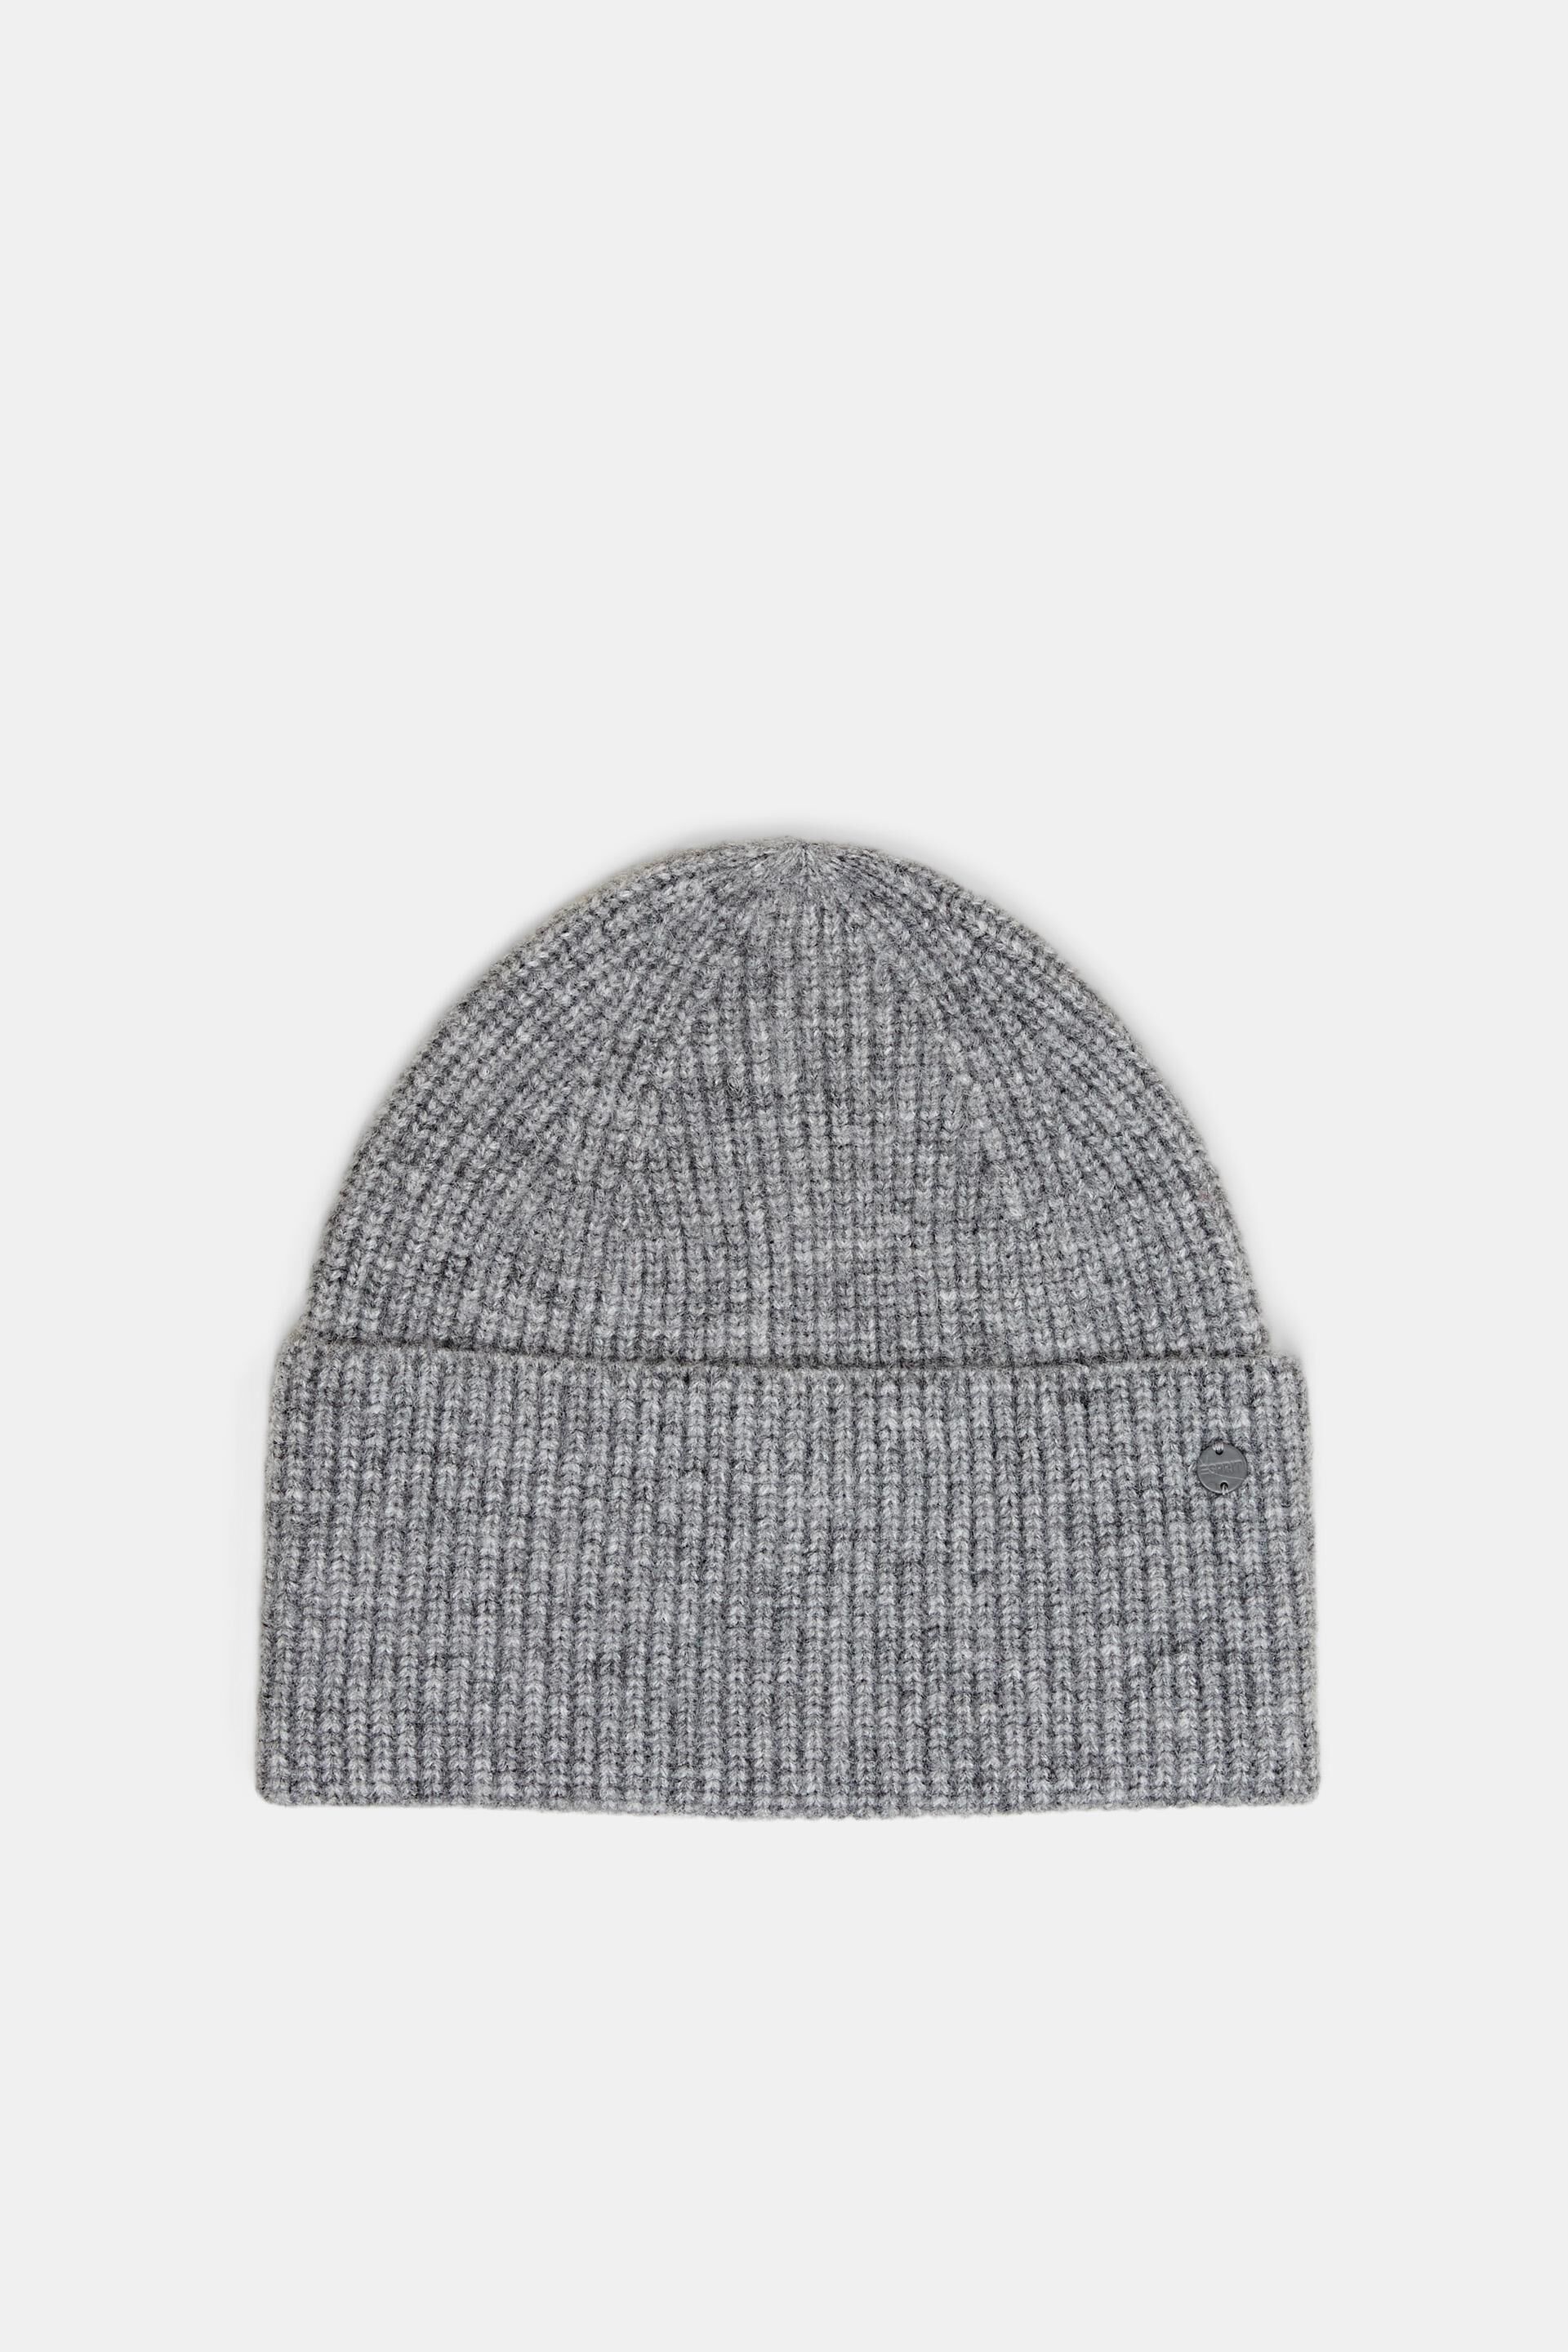 Esprit Online Store Hats/Caps